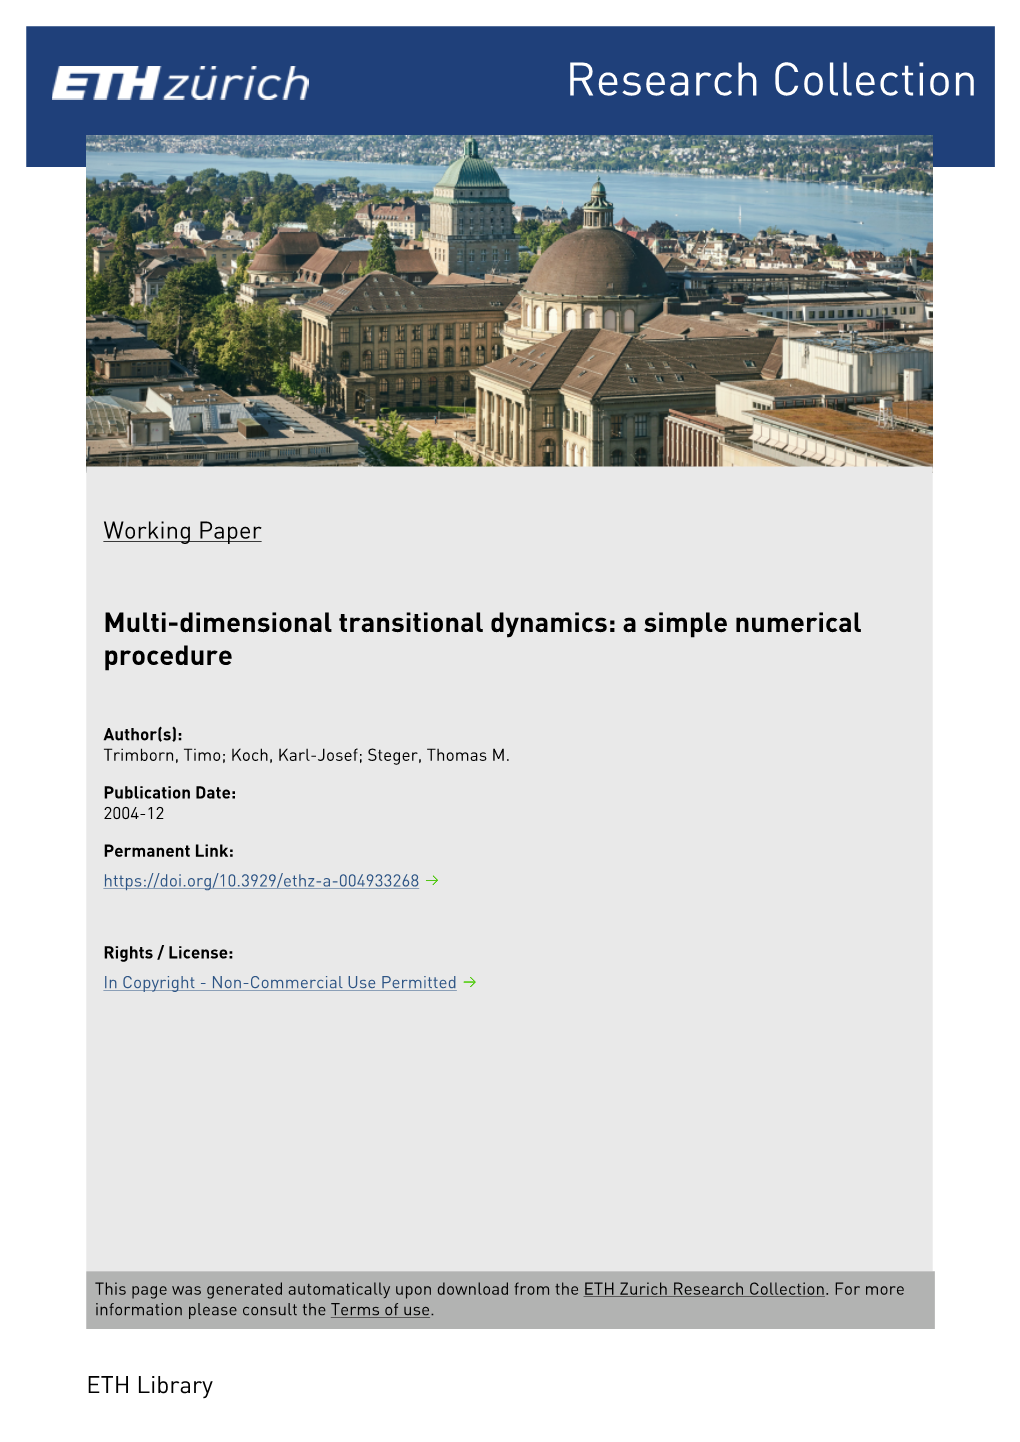 Multi-Dimensional Transitional Dynamics: a Simple Numerical Procedure